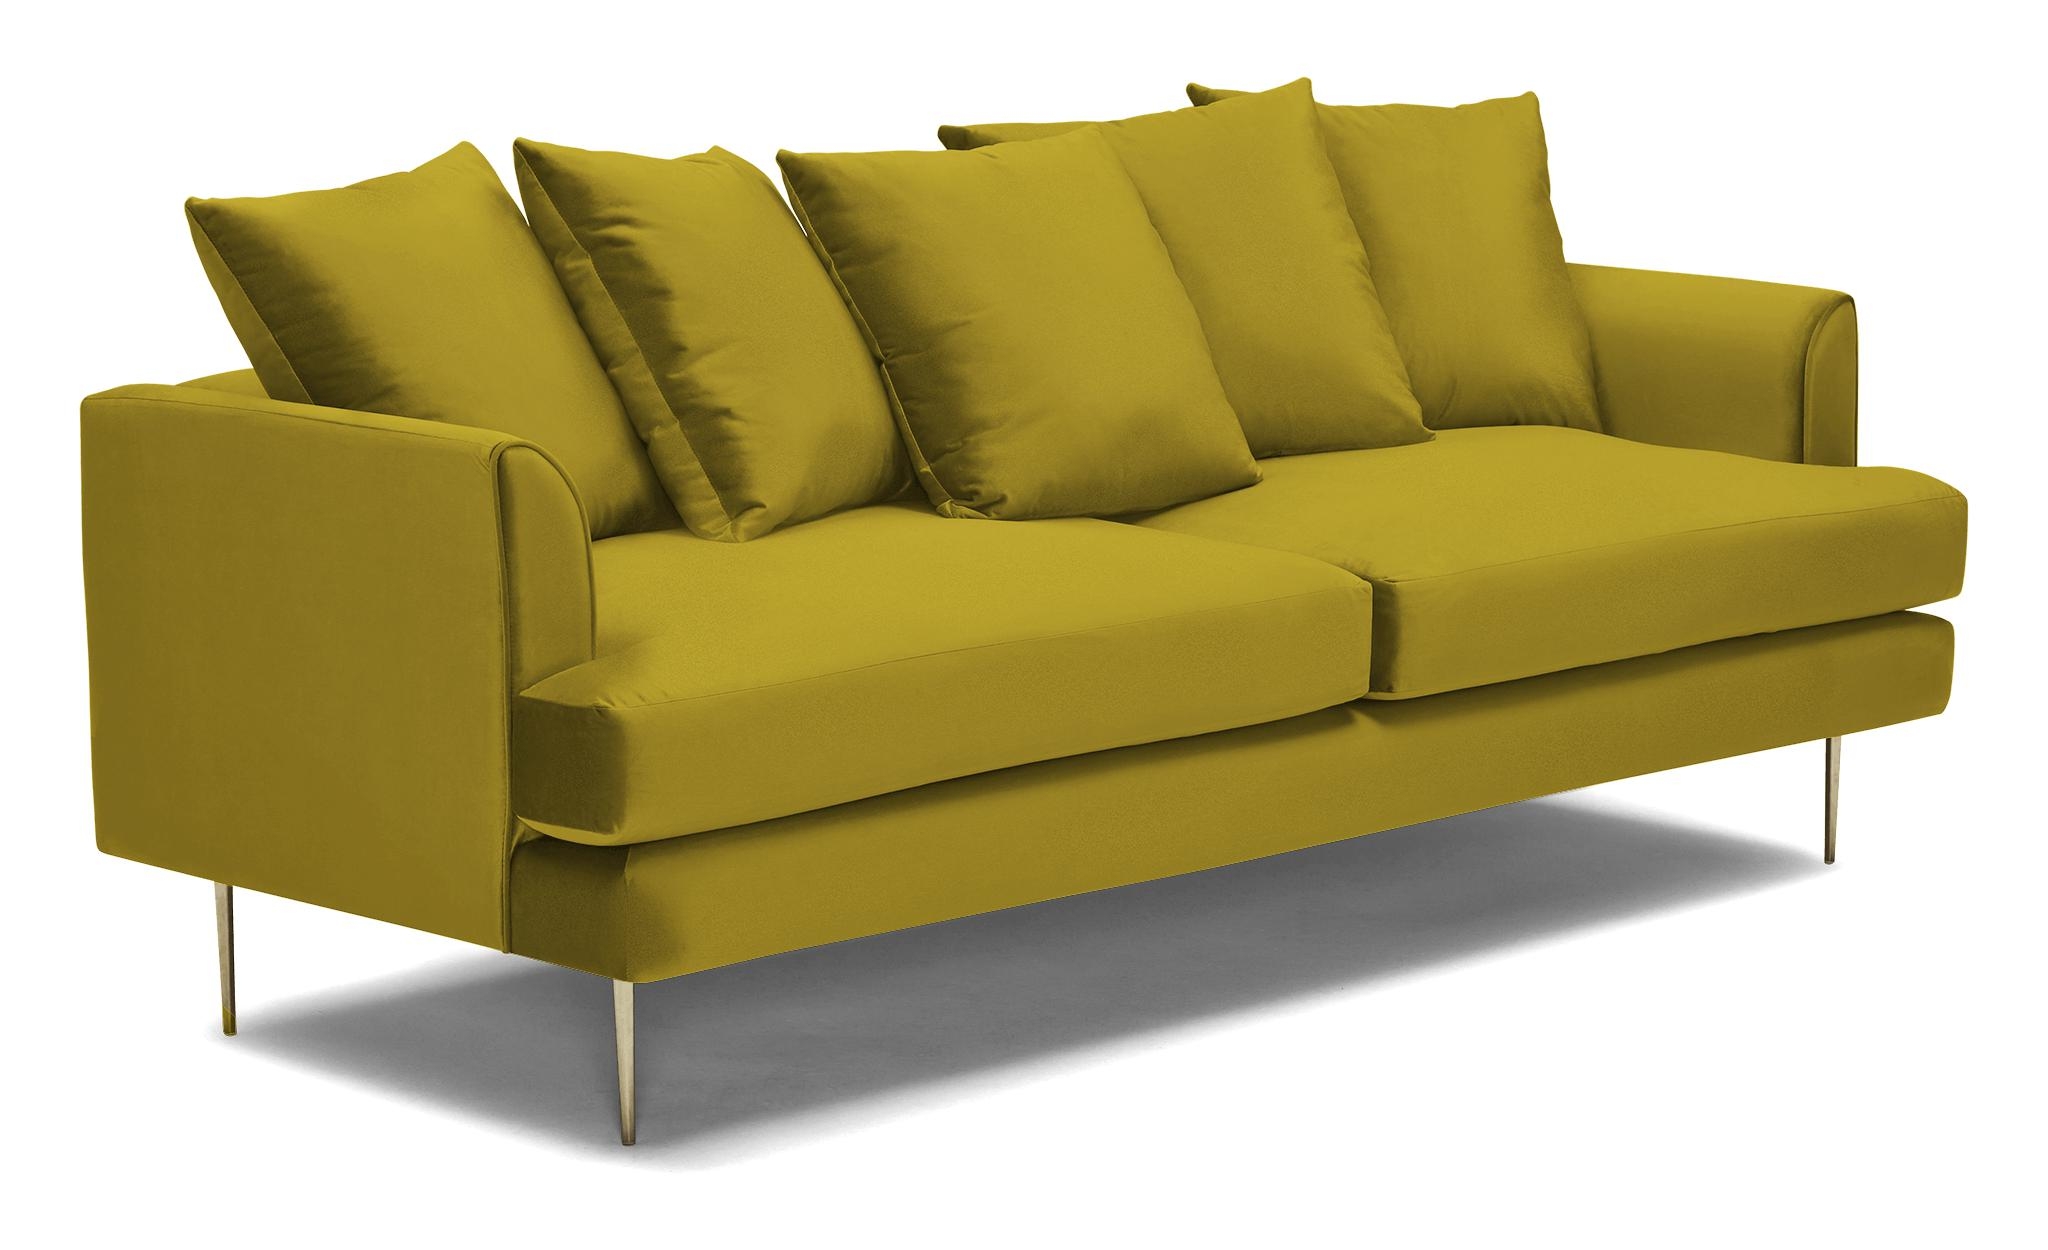 Yellow Aime Mid Century Modern Sofa - Bloke Goldenrod - Image 1